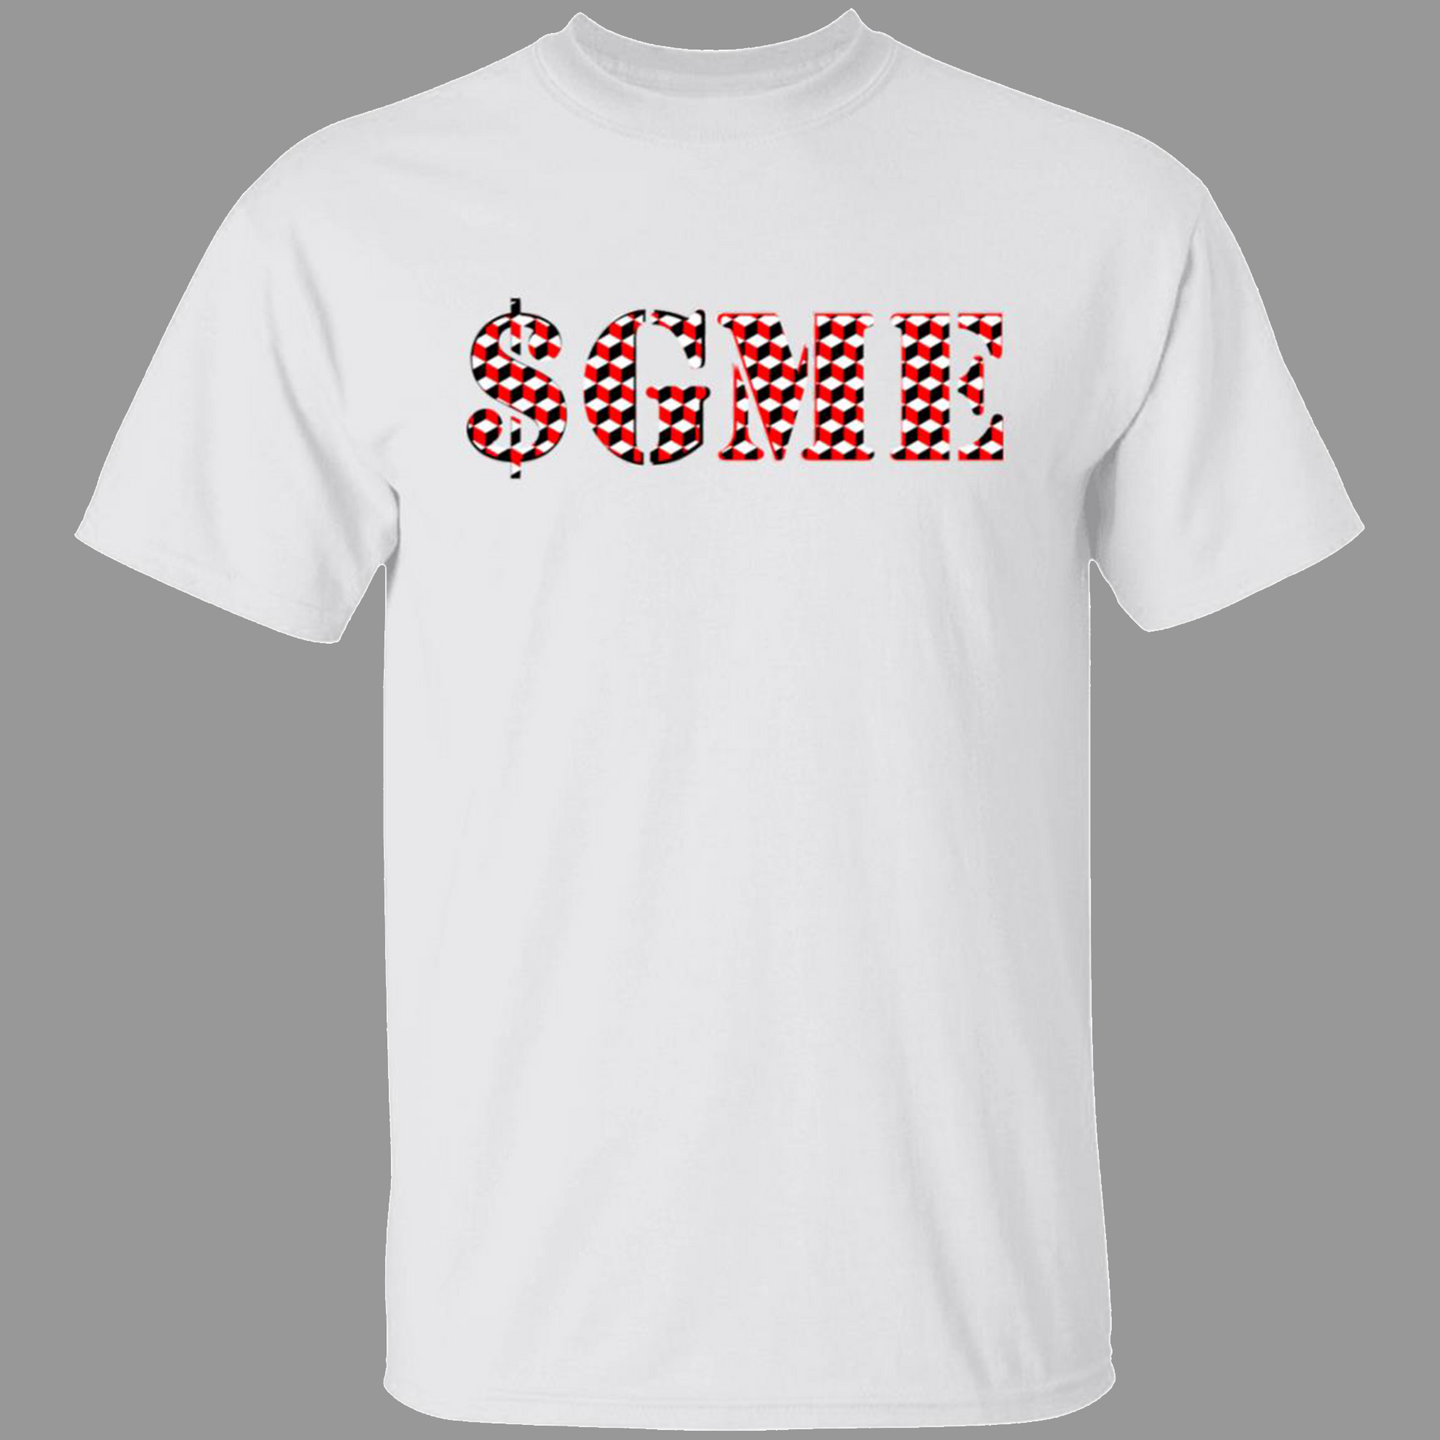 $GME Premium Short & Long Sleeve T-Shirts Unisex